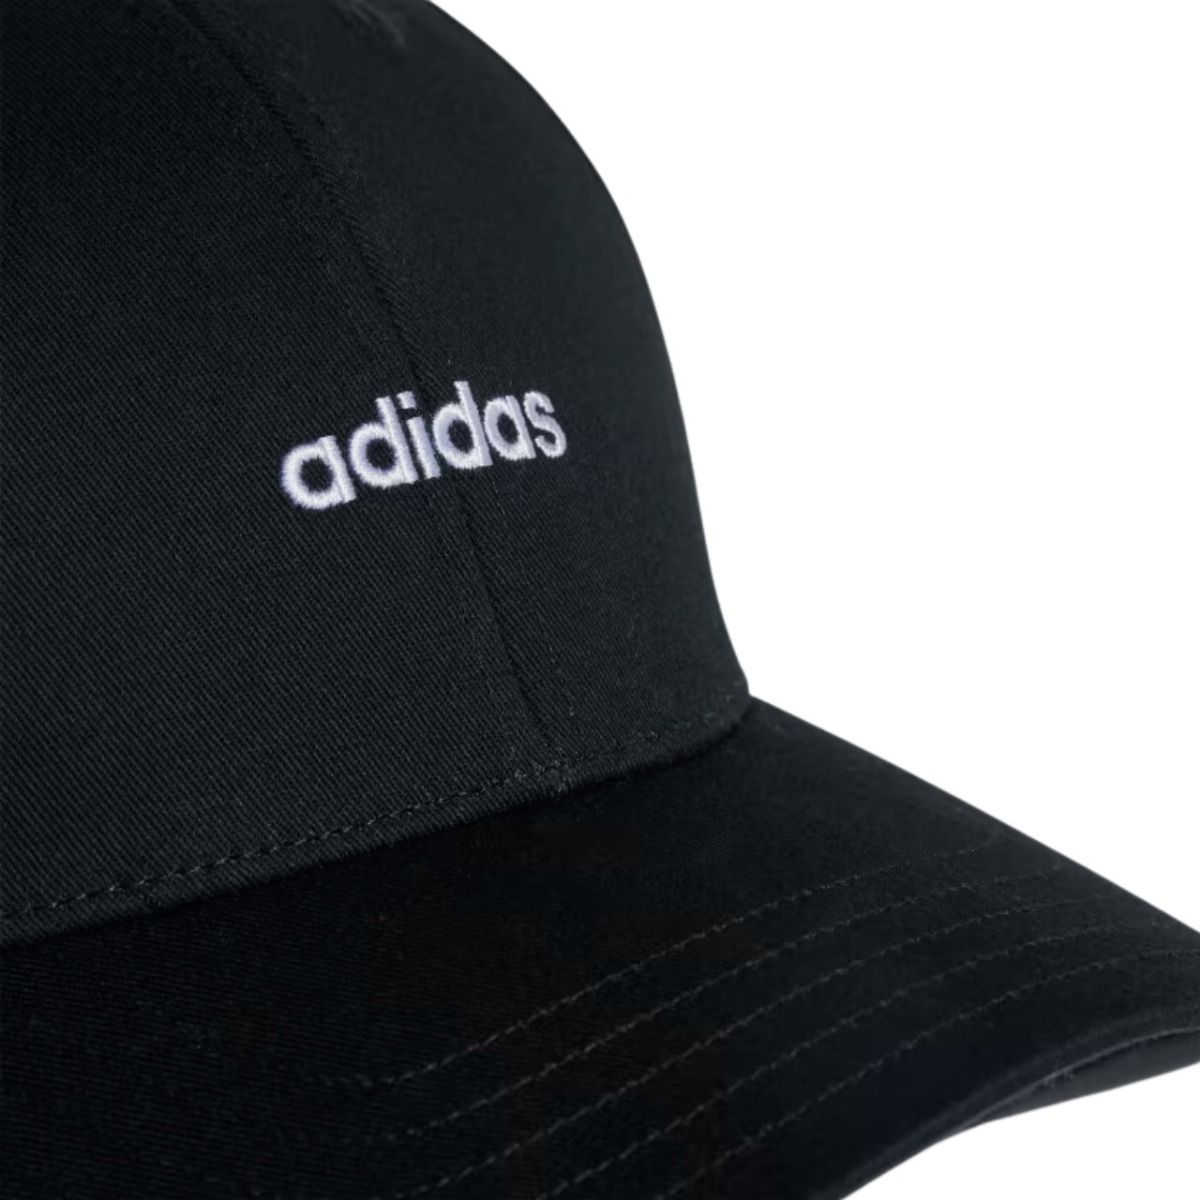 adidas Șapcă cu cozoroc Baseball Street Cap OSFM HT6355